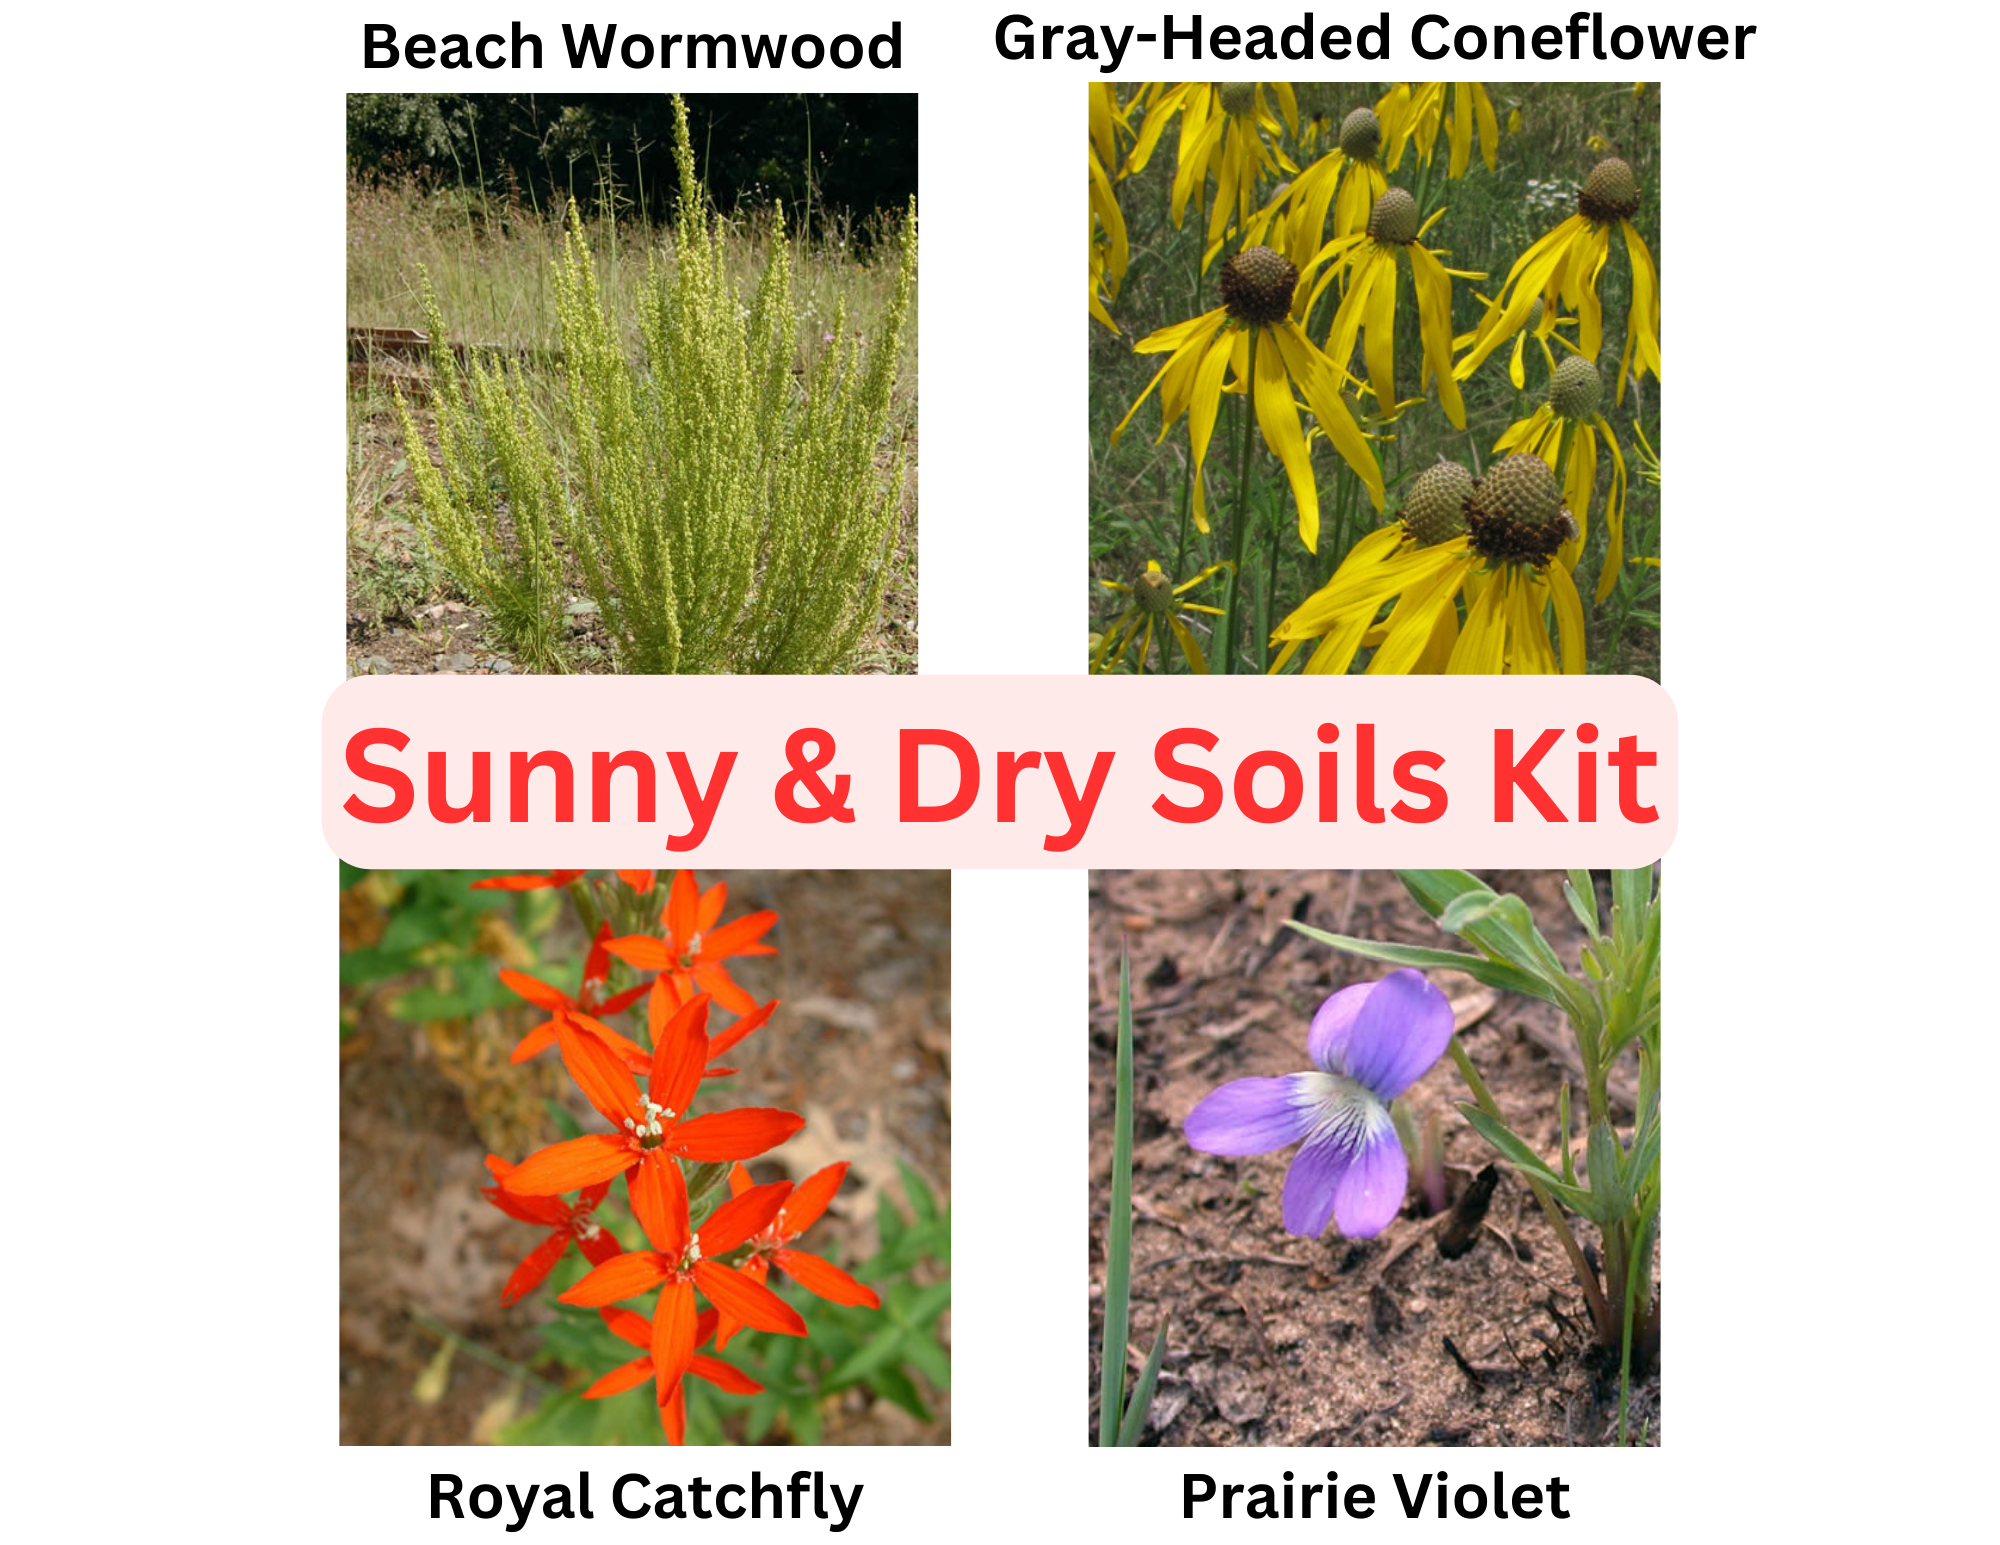 Sunny and Dry Soils Kit